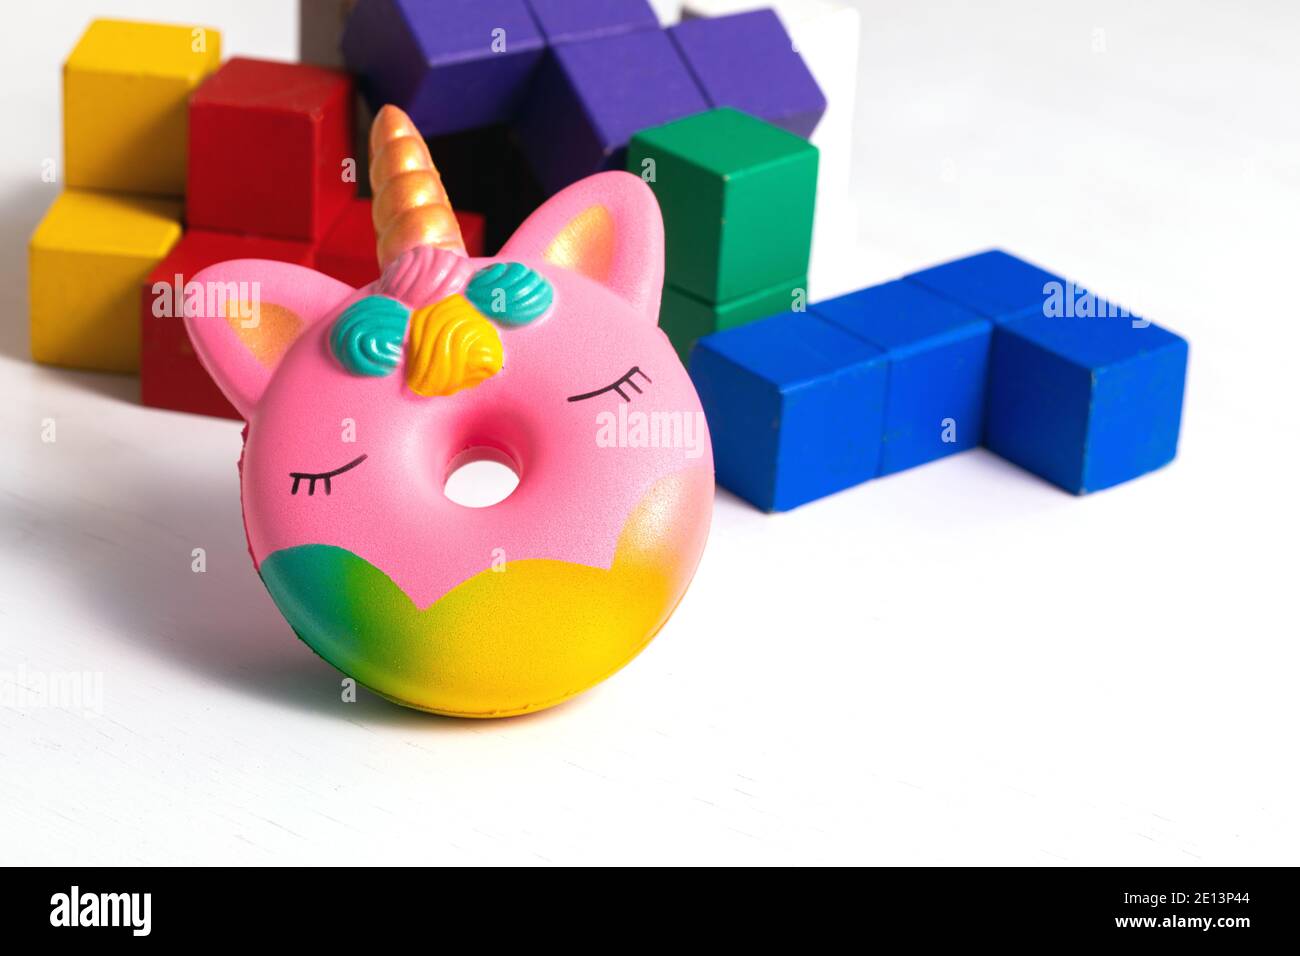 Children toys wooden colorful blocks and squash antistress toy donut unicorn  on white background Stock Photo - Alamy